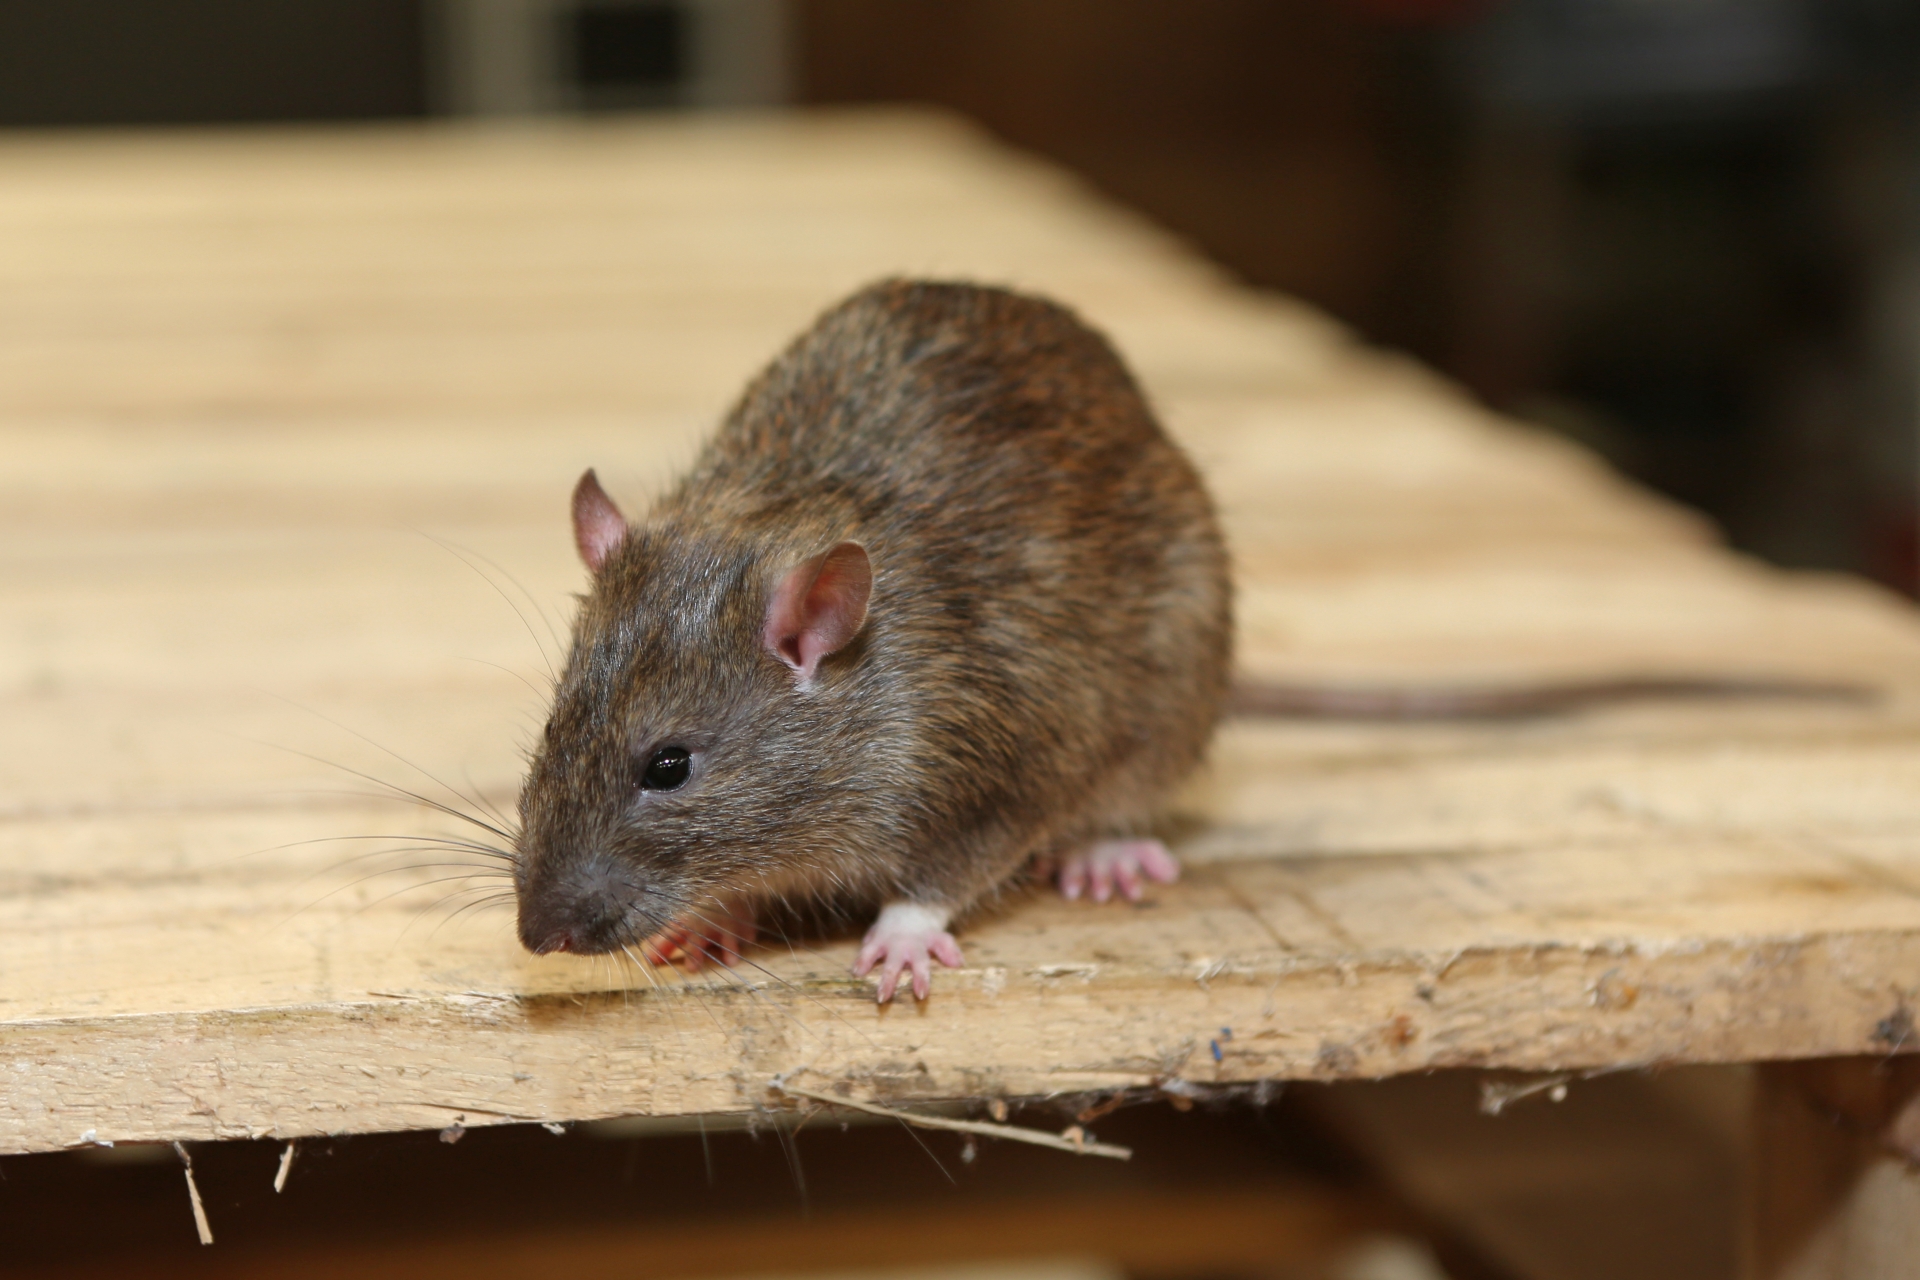 Rat extermination, Pest Control in Ashtead, KT21. Call Now 020 8166 9746